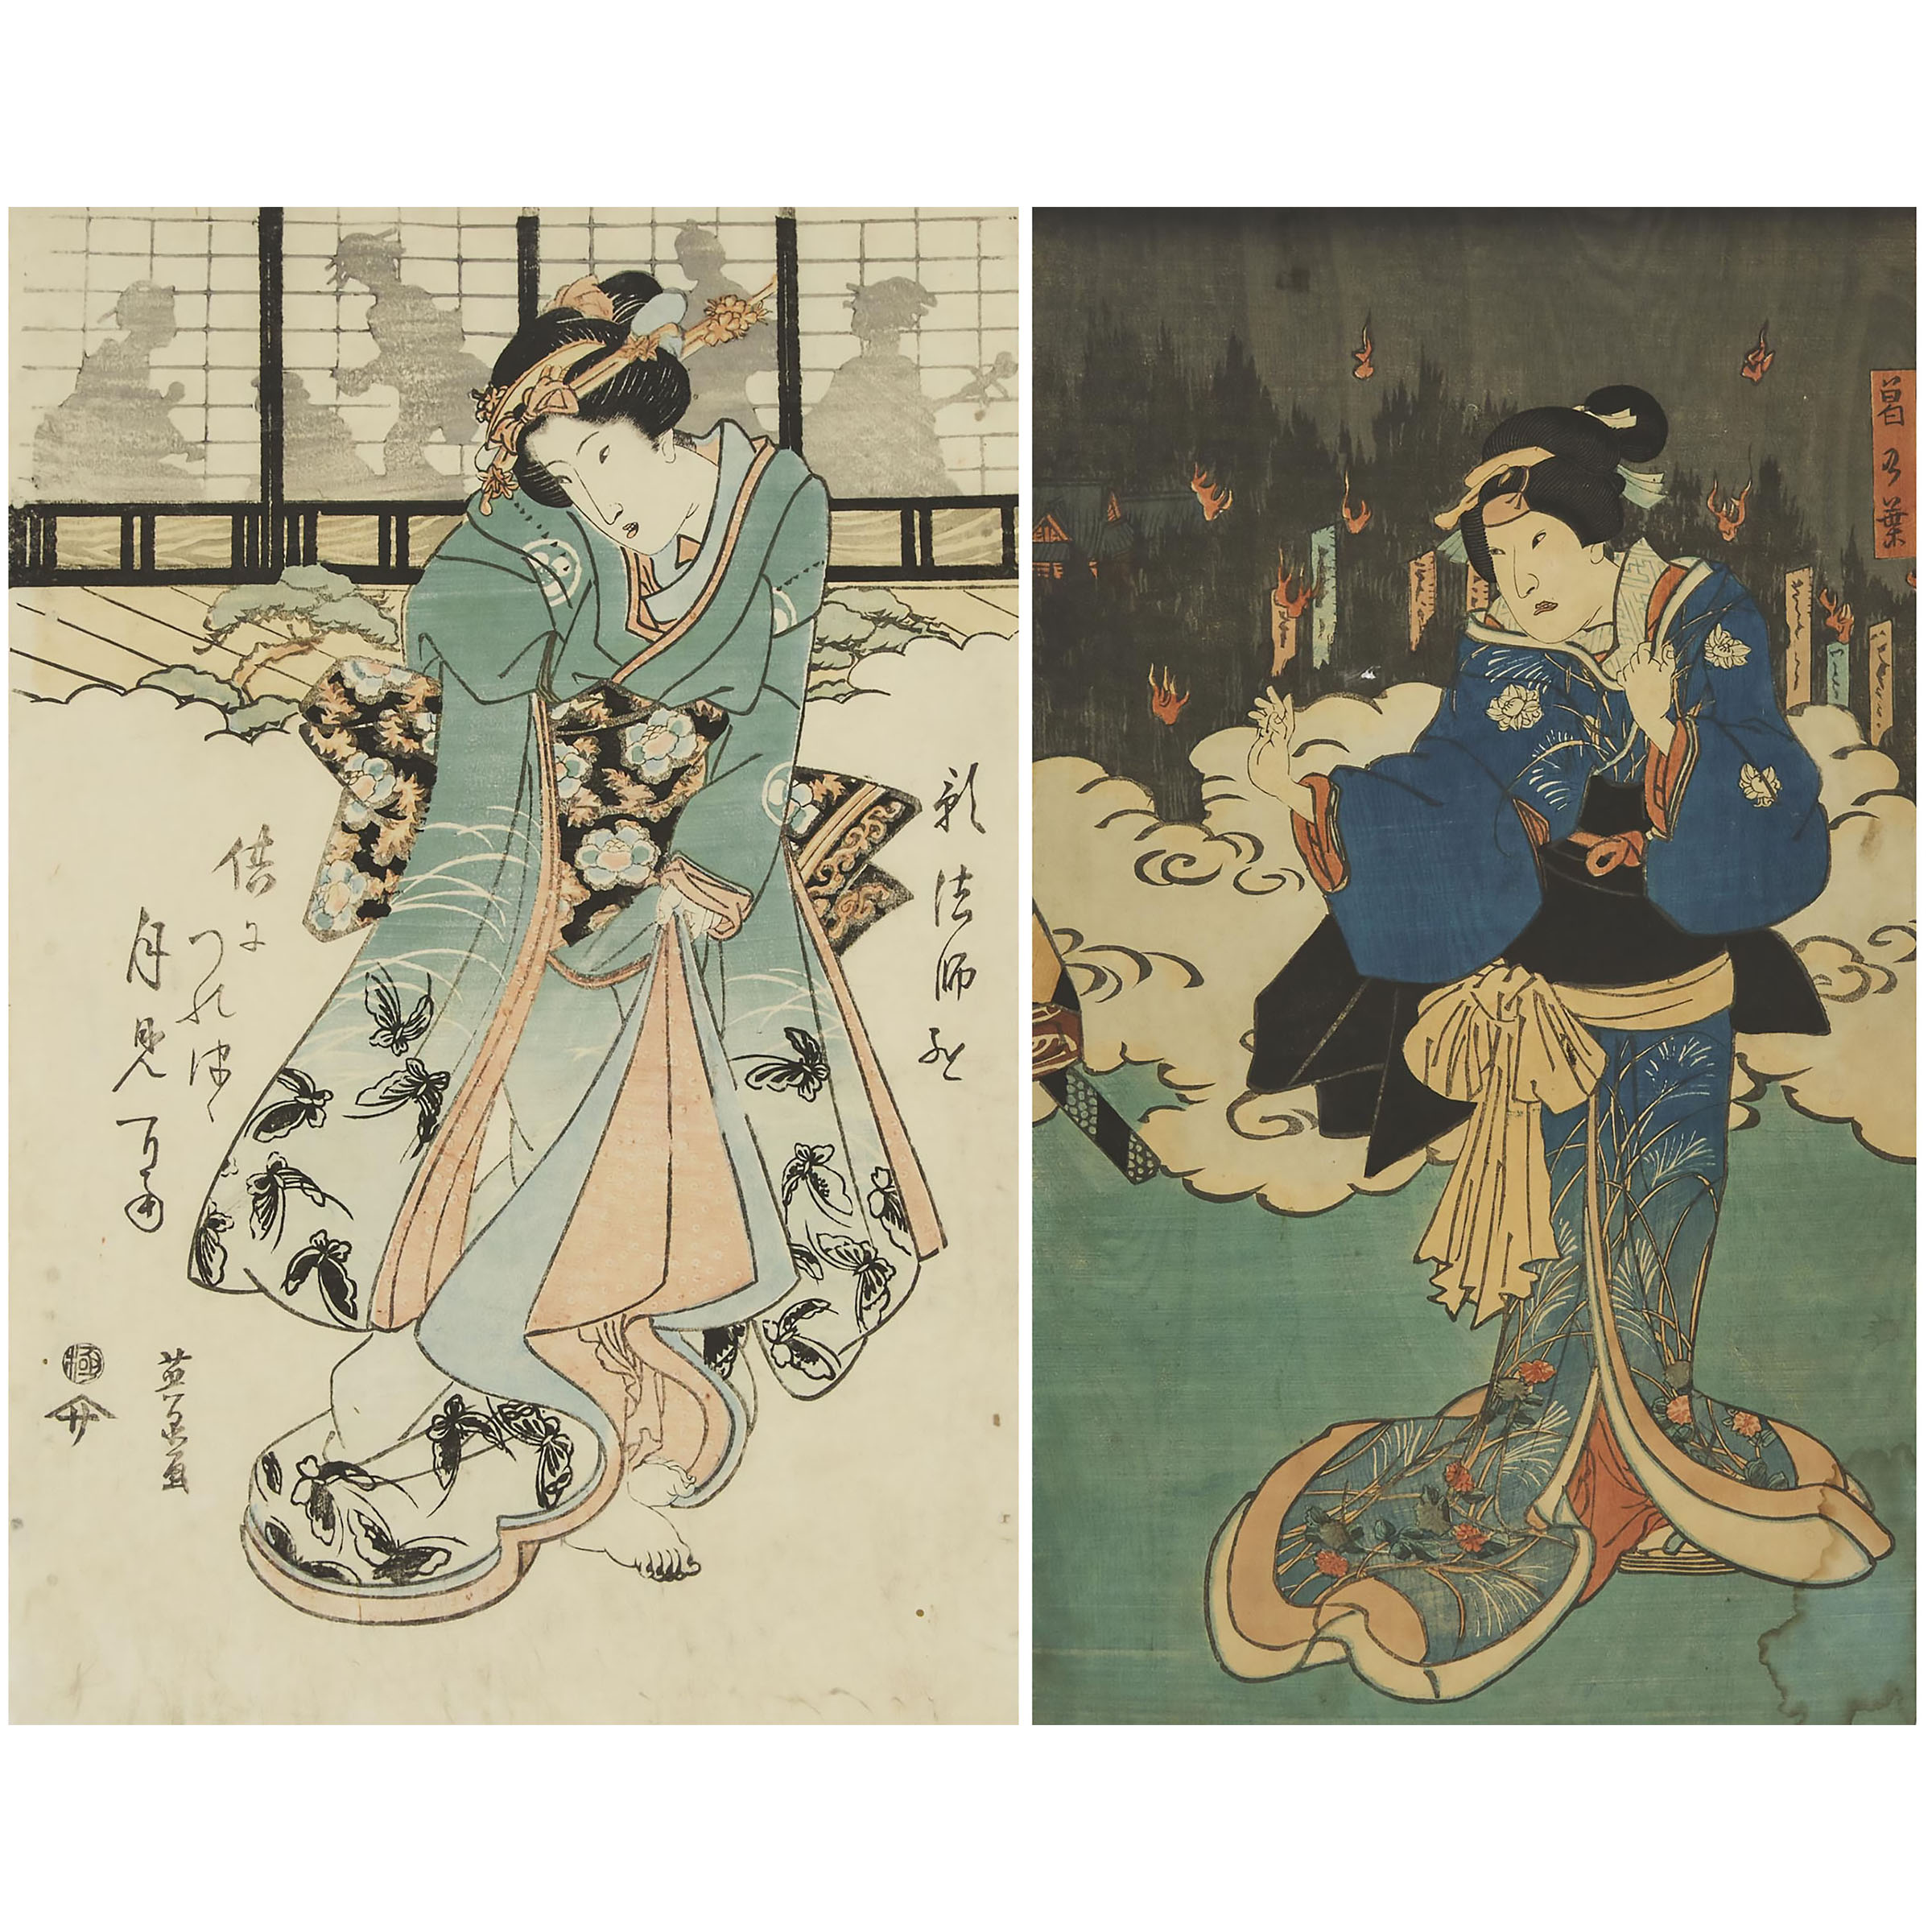 Keisai Eisen (1790-1848), A Beauty with Shadows Against a Shoji, Early 19th Century